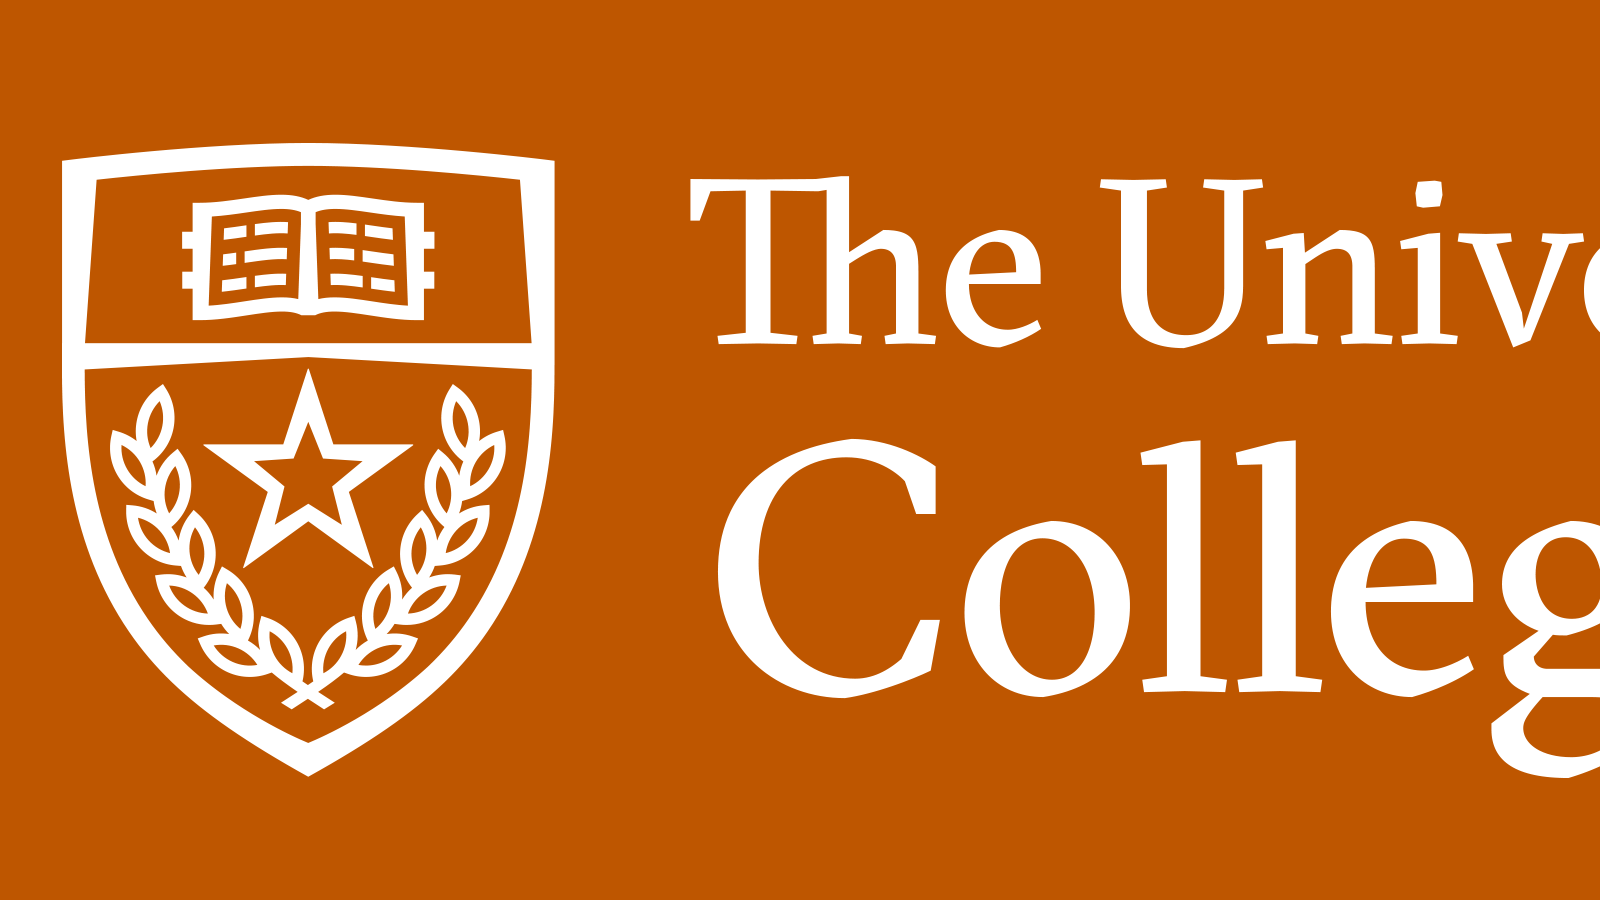 UT Logo - Brand New: New Logo and Identity for University of Texas at Austin ...